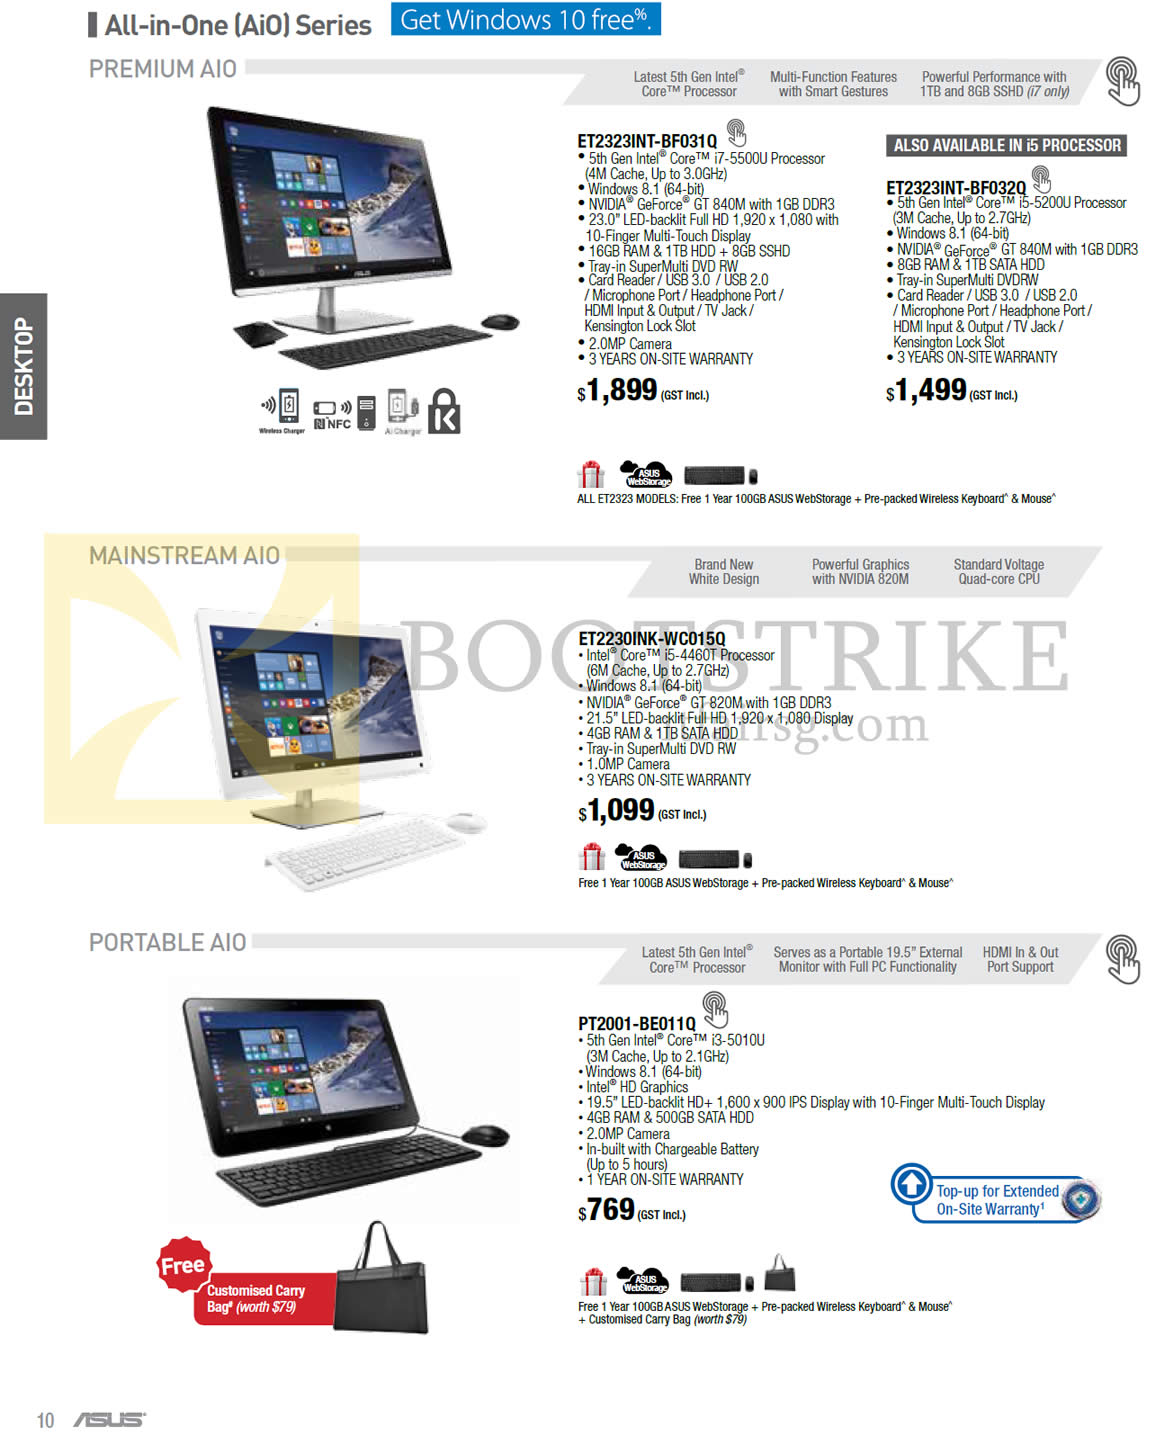 COMEX 2015 price list image brochure of ASUS AIO Desktop PC, ET2323INT-BF031Q, ET2323INT-BF032Q, ET2230INK-WC015Q, PT2001-BE011Q